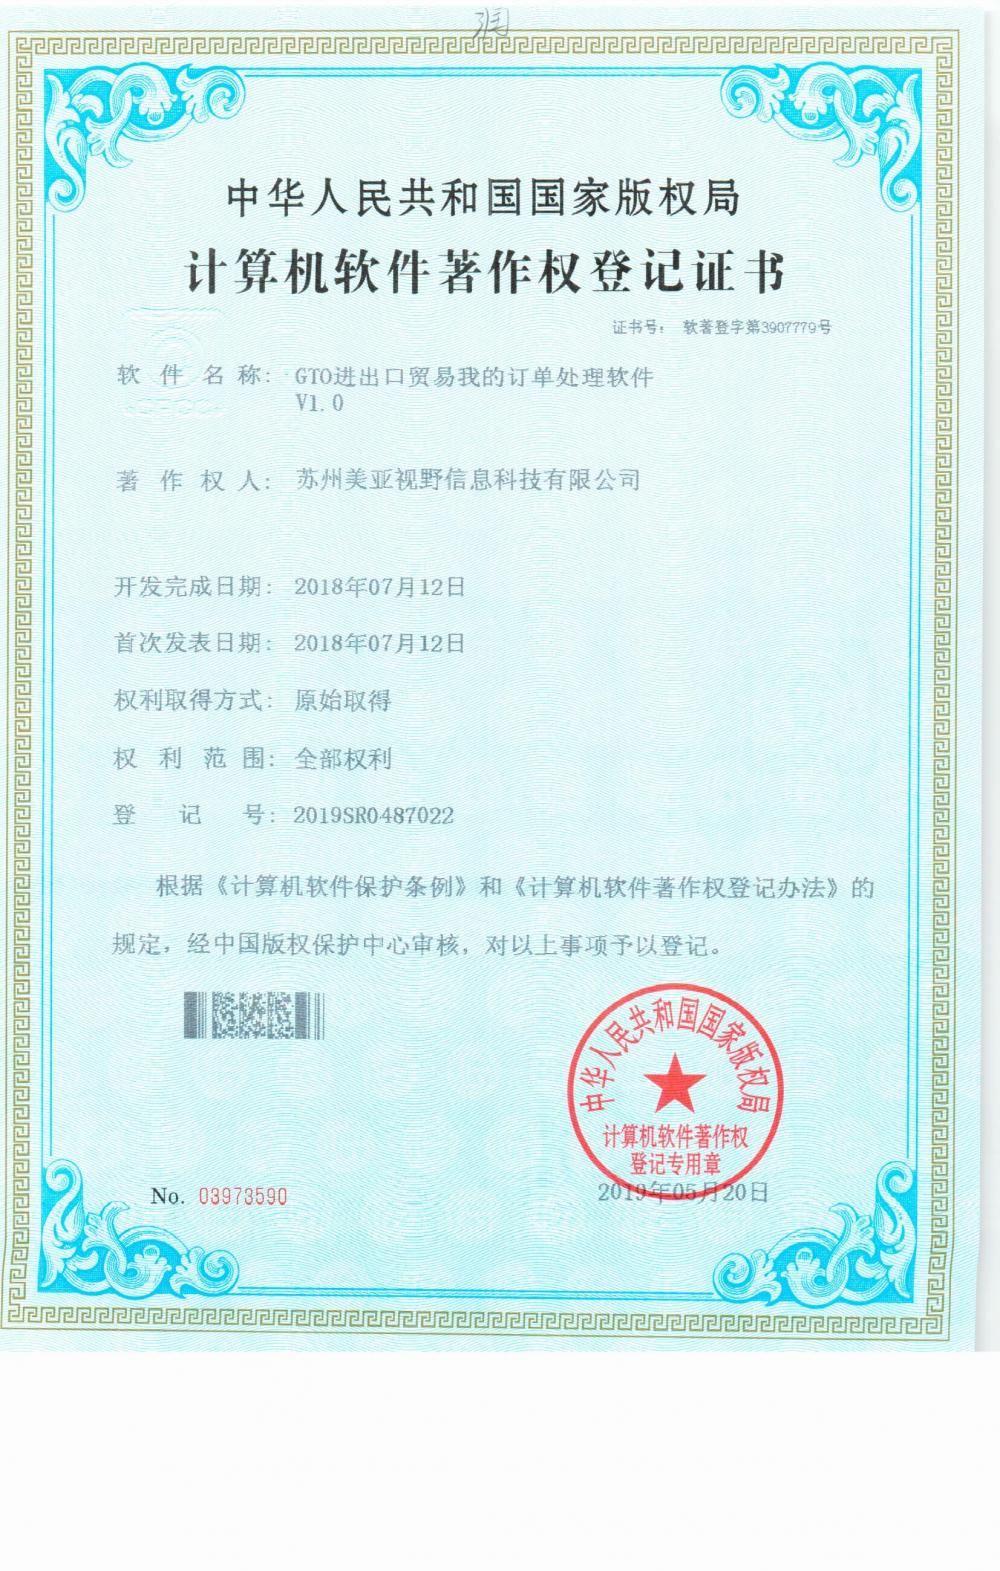 Data analysis report - American Asian soft book certificate